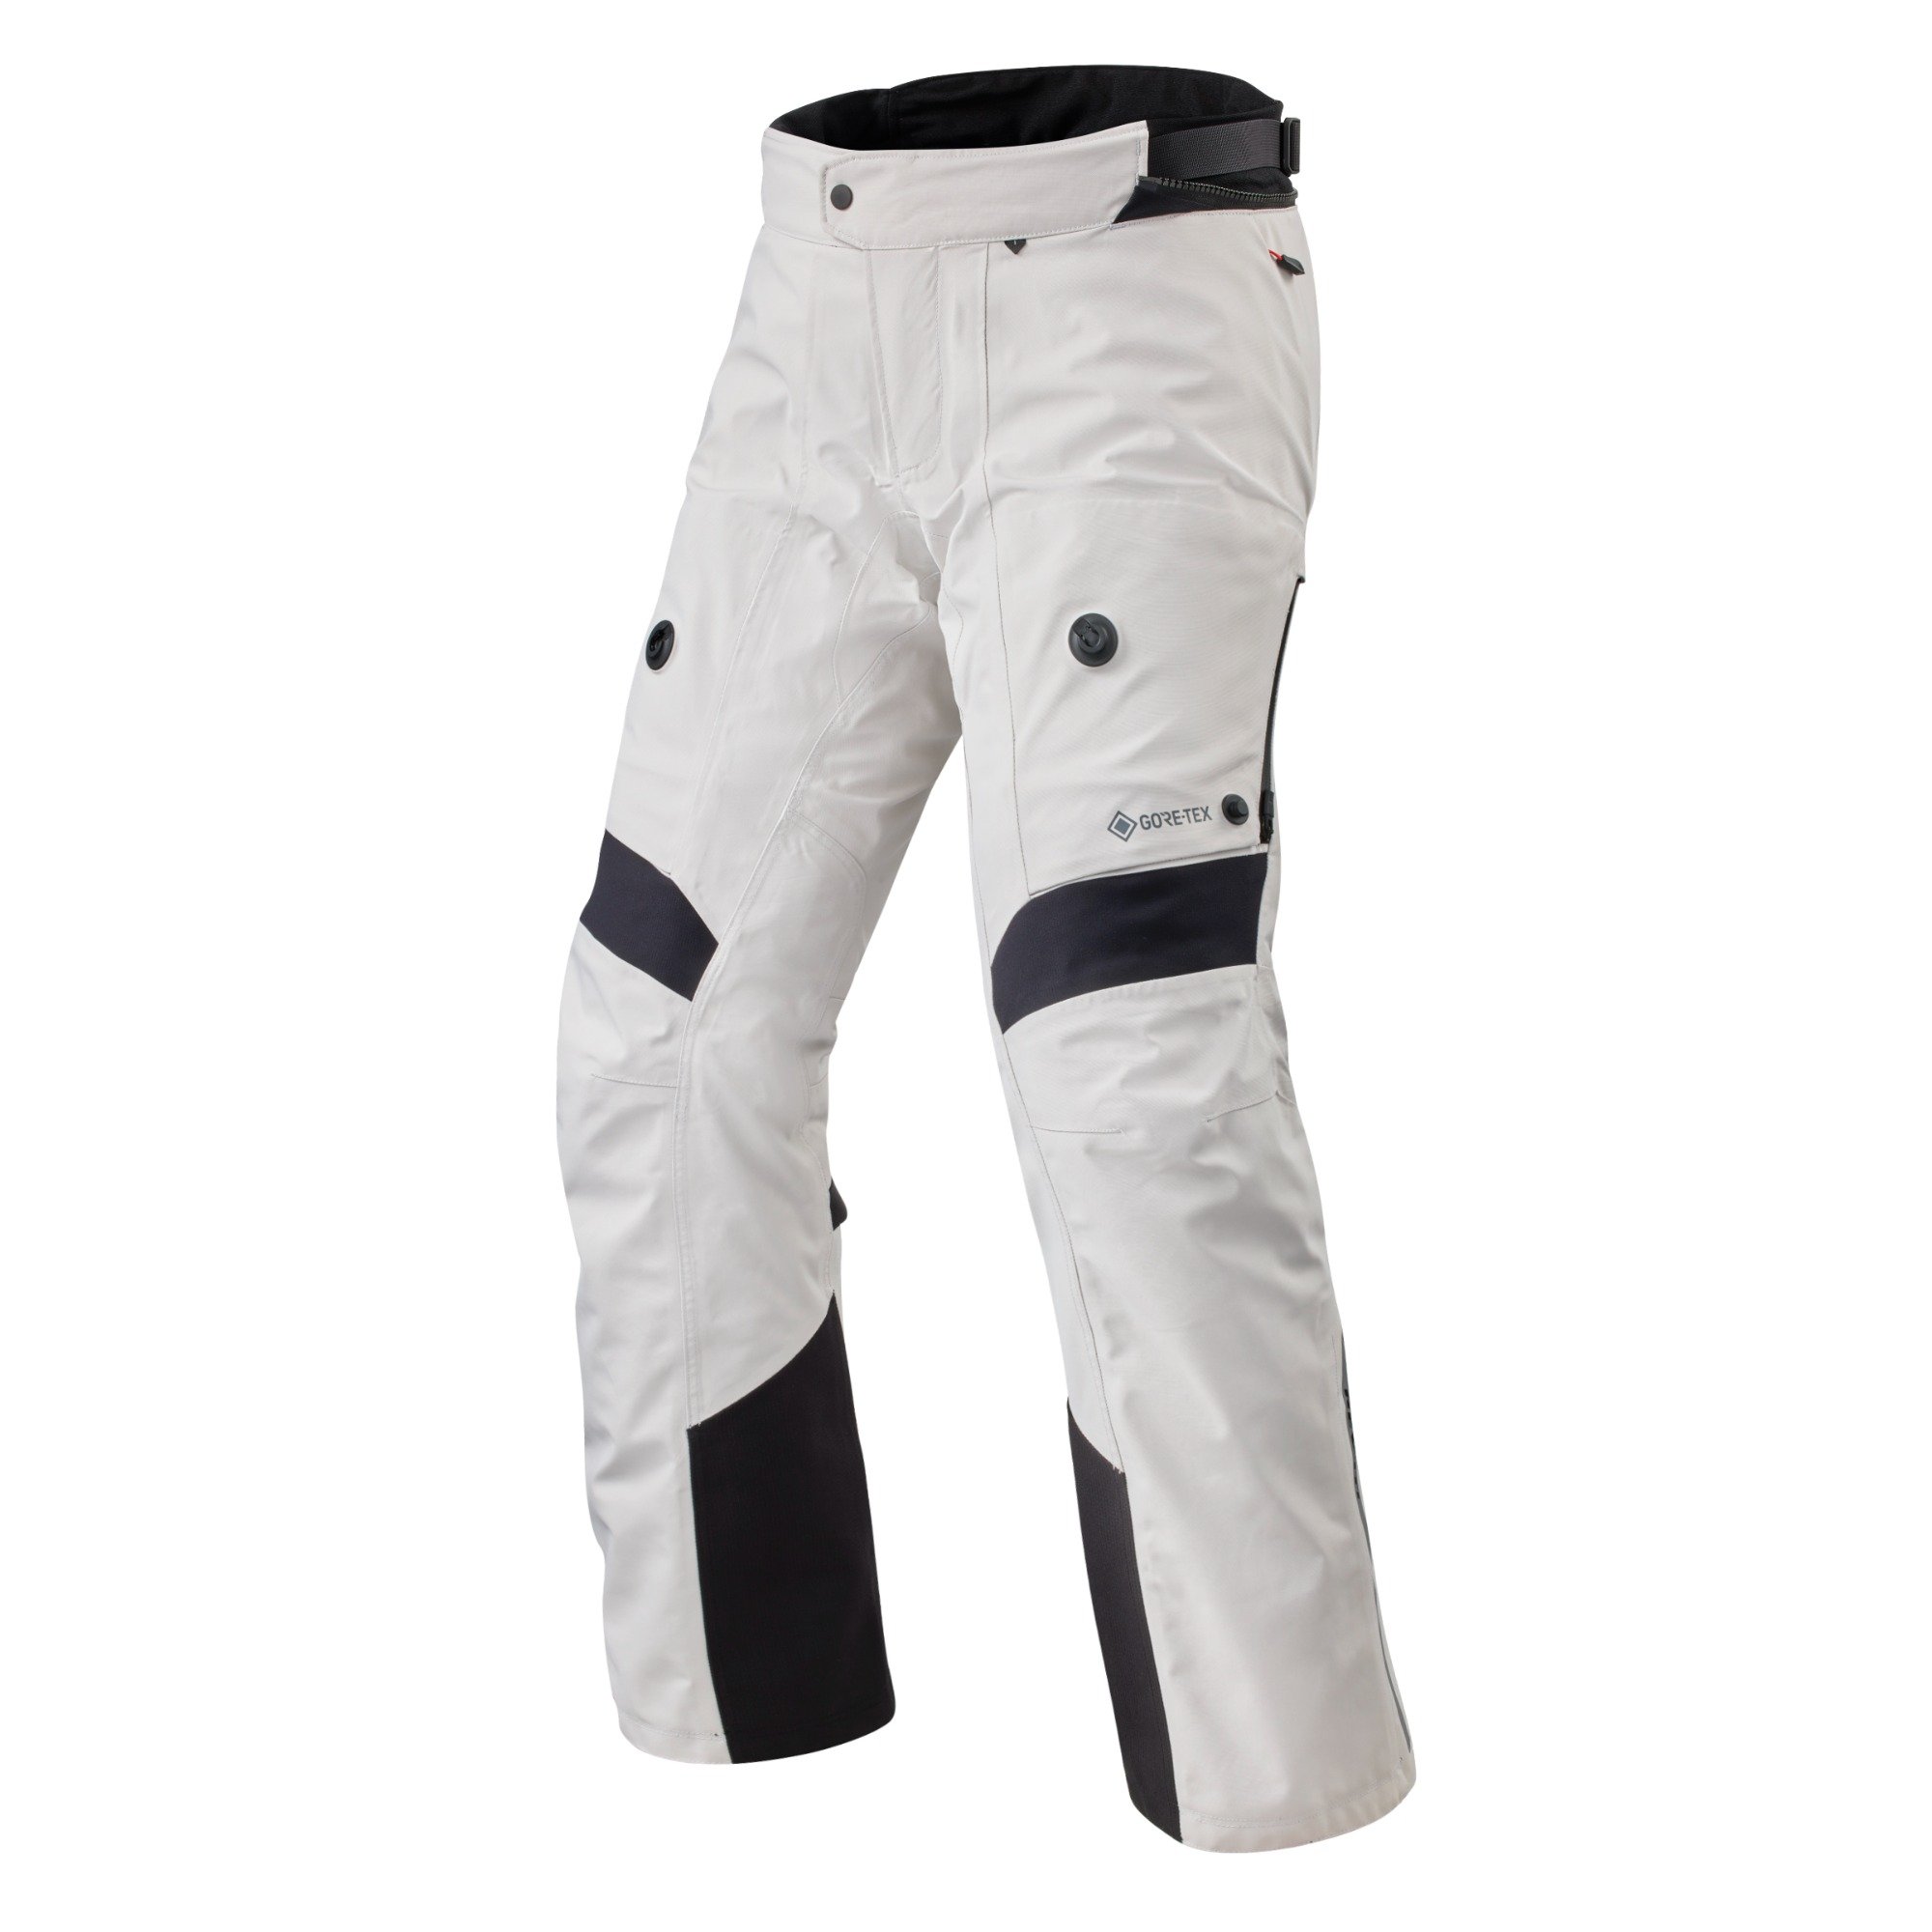 Image of REV'IT! Pants Poseidon 3 GTX Silver Black Long Motorcycle Pants Size M ID 8700001362689